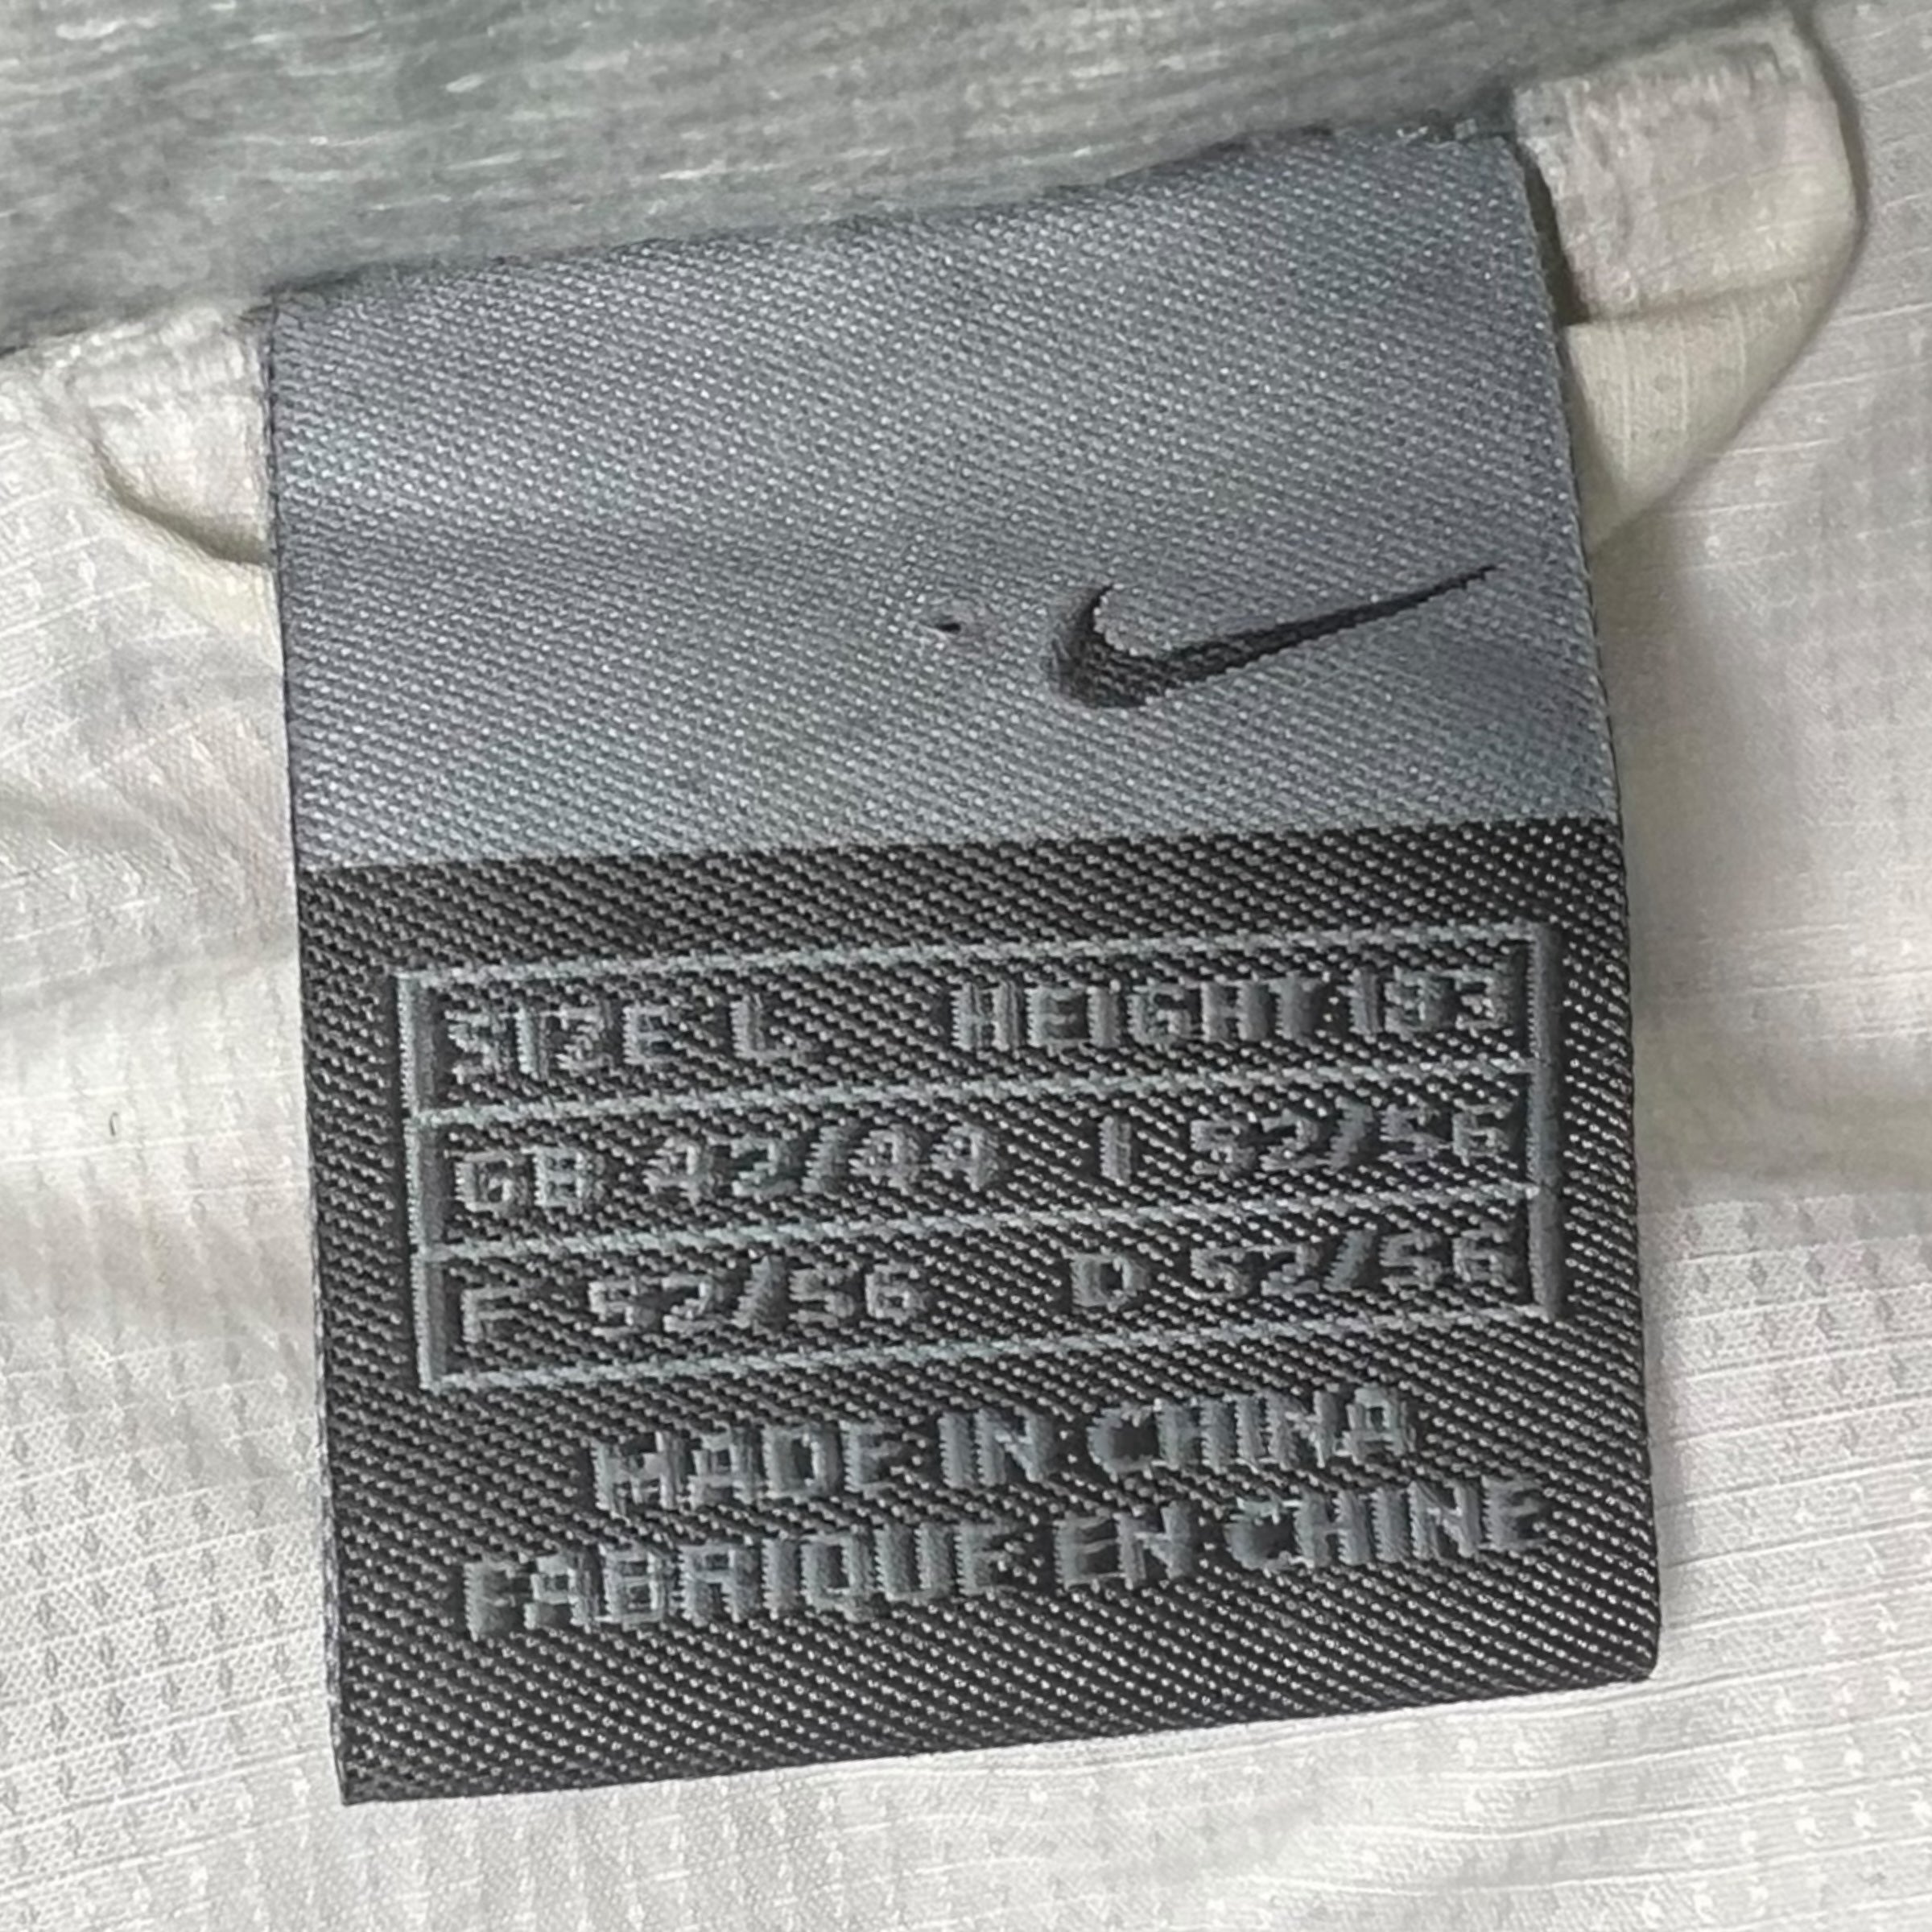 Vintage Nike Side Swoosh Puffer Jacket - White/Navy